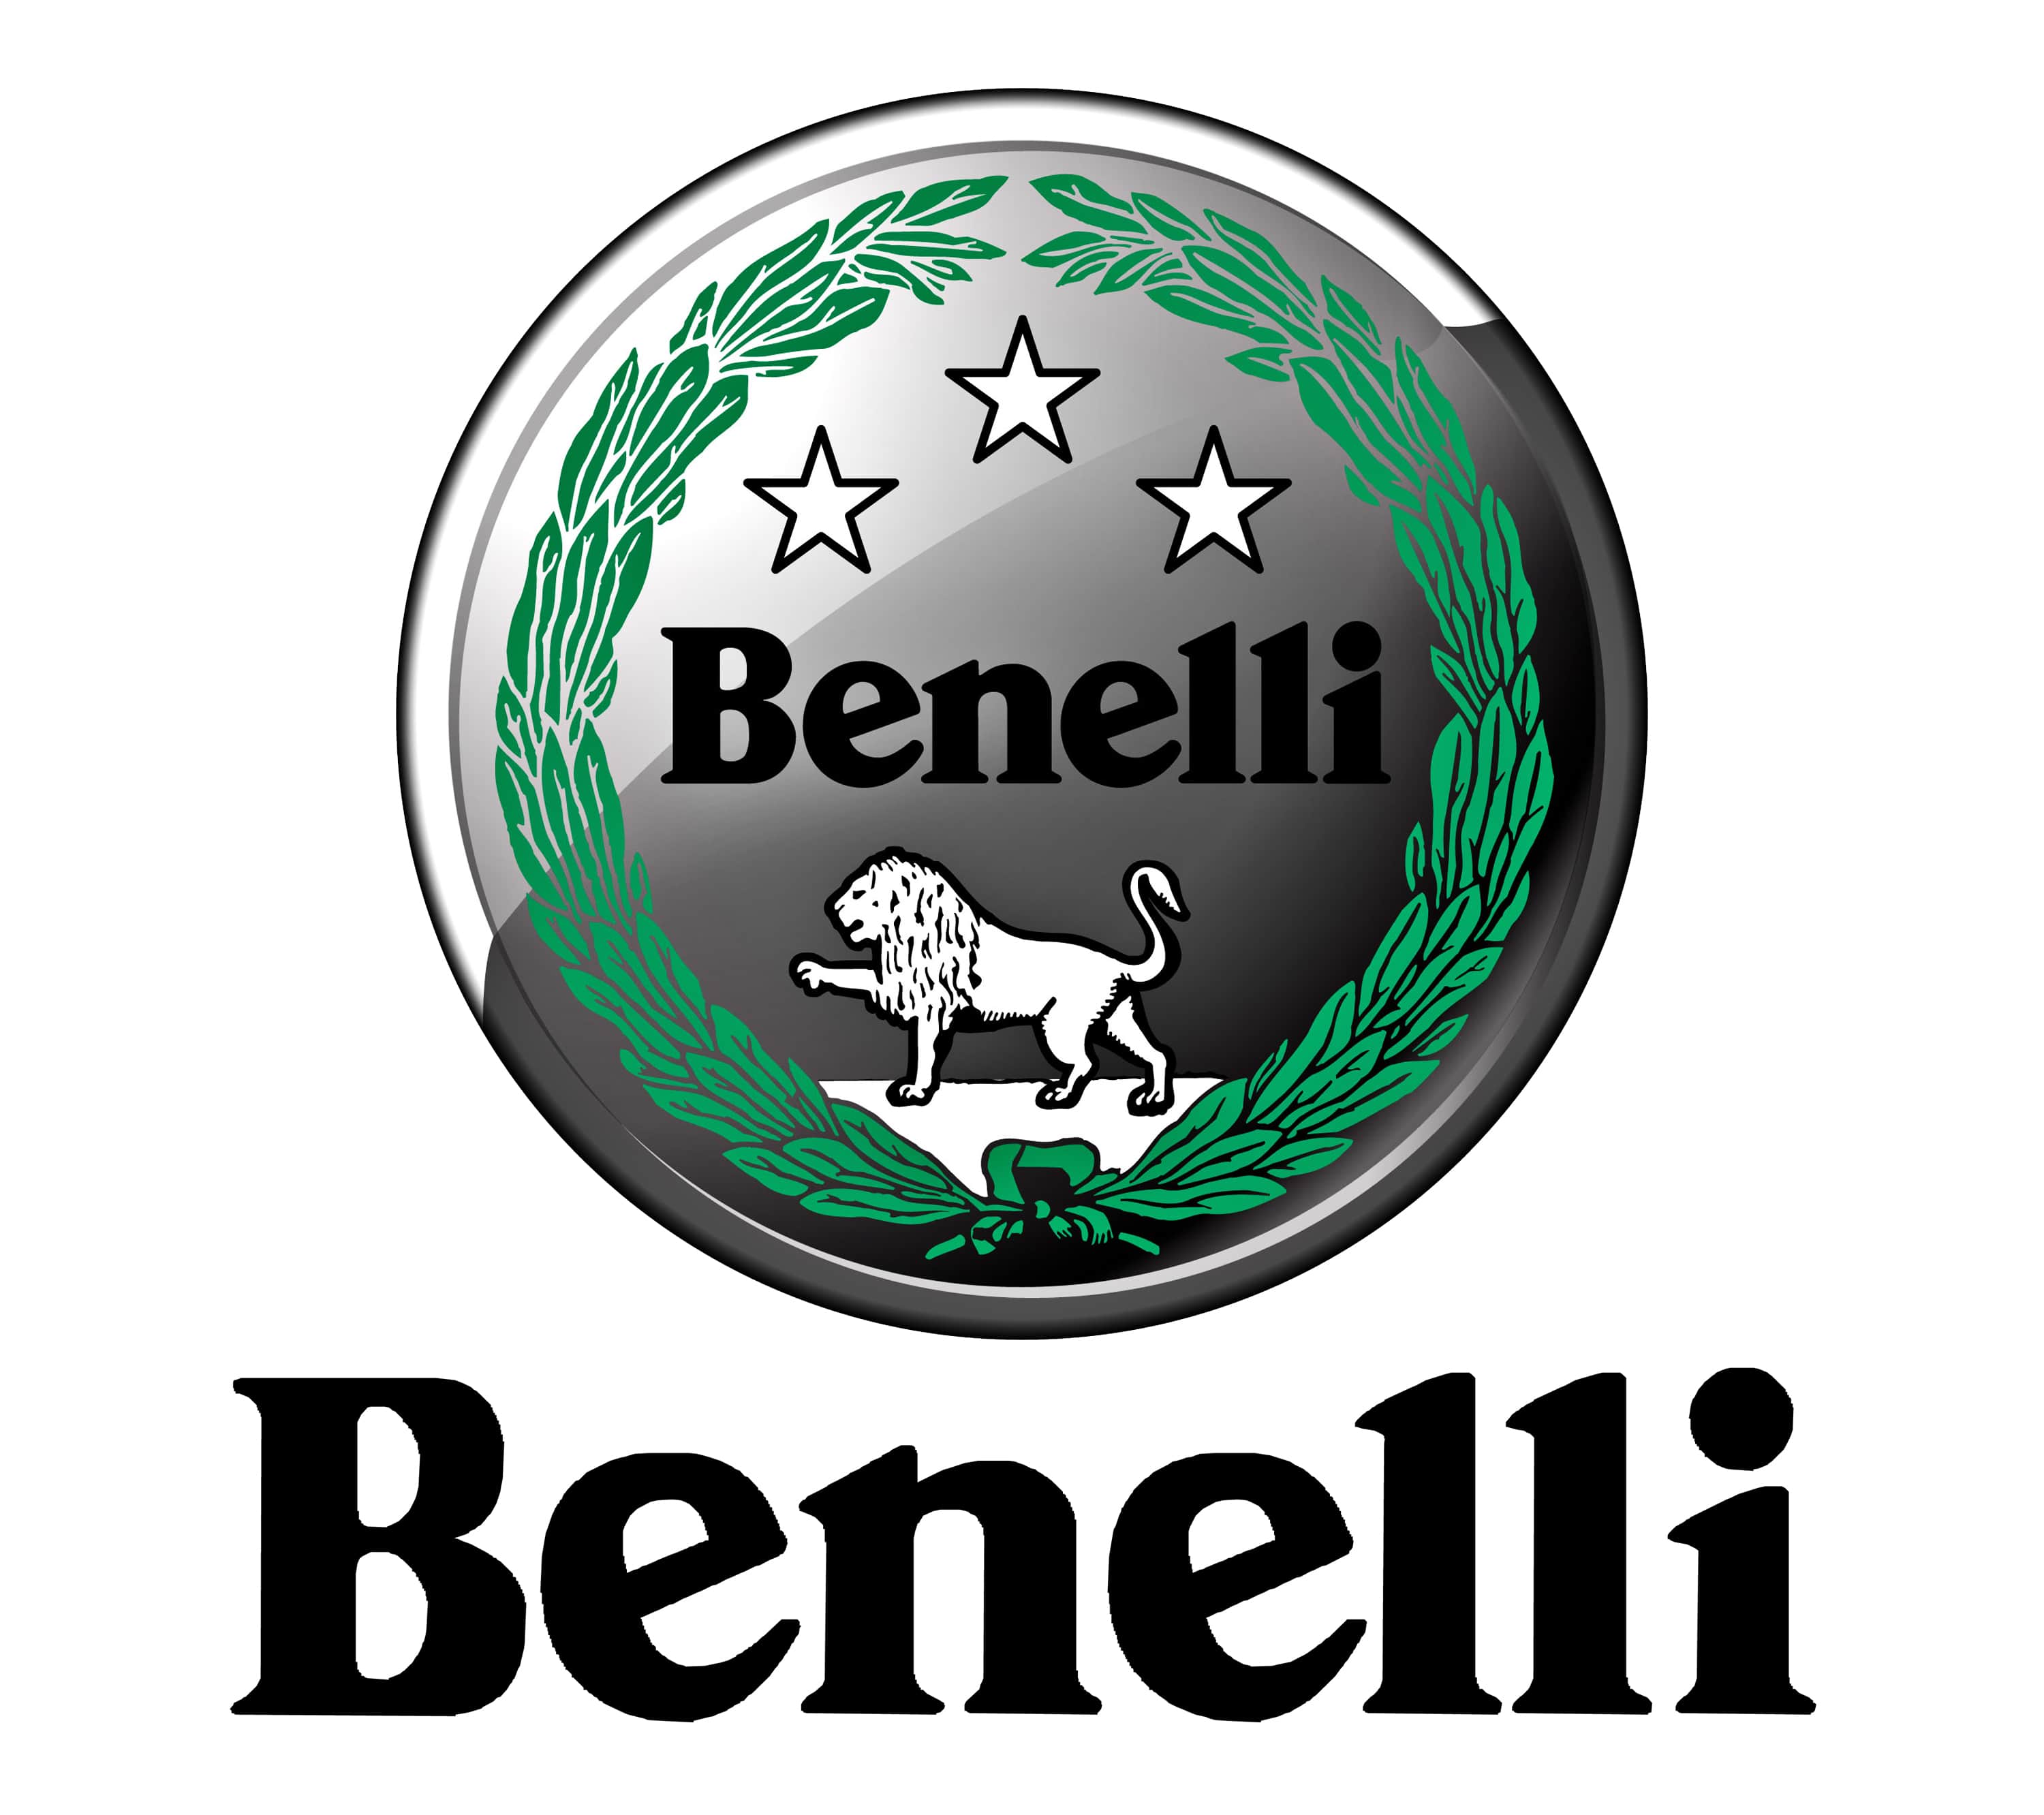 Benelli Logo - Benelli logo | Motorcycle Brands